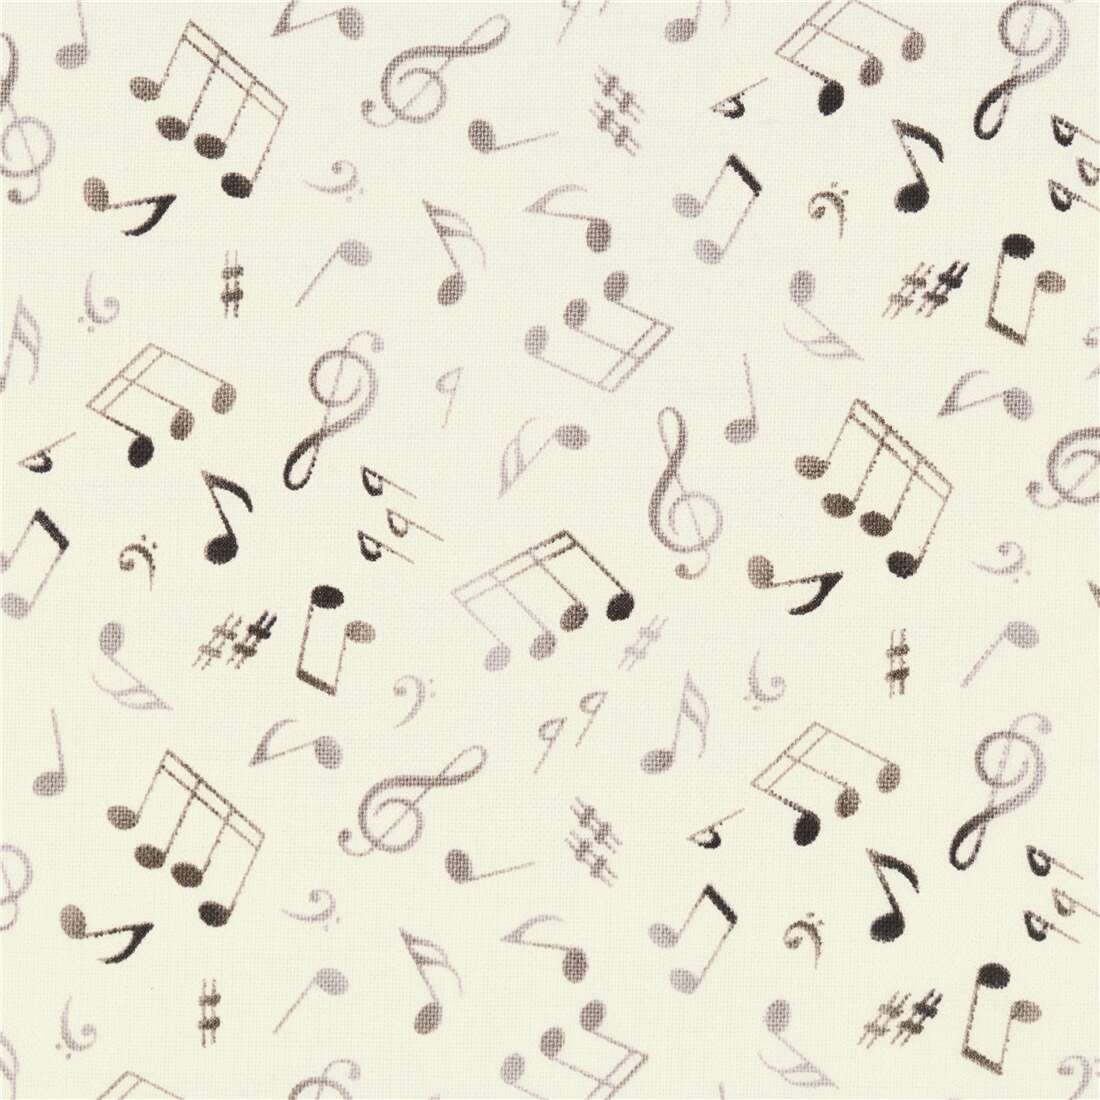 black music notes and symbols on cream background USA fabric cotton -  modeS4u